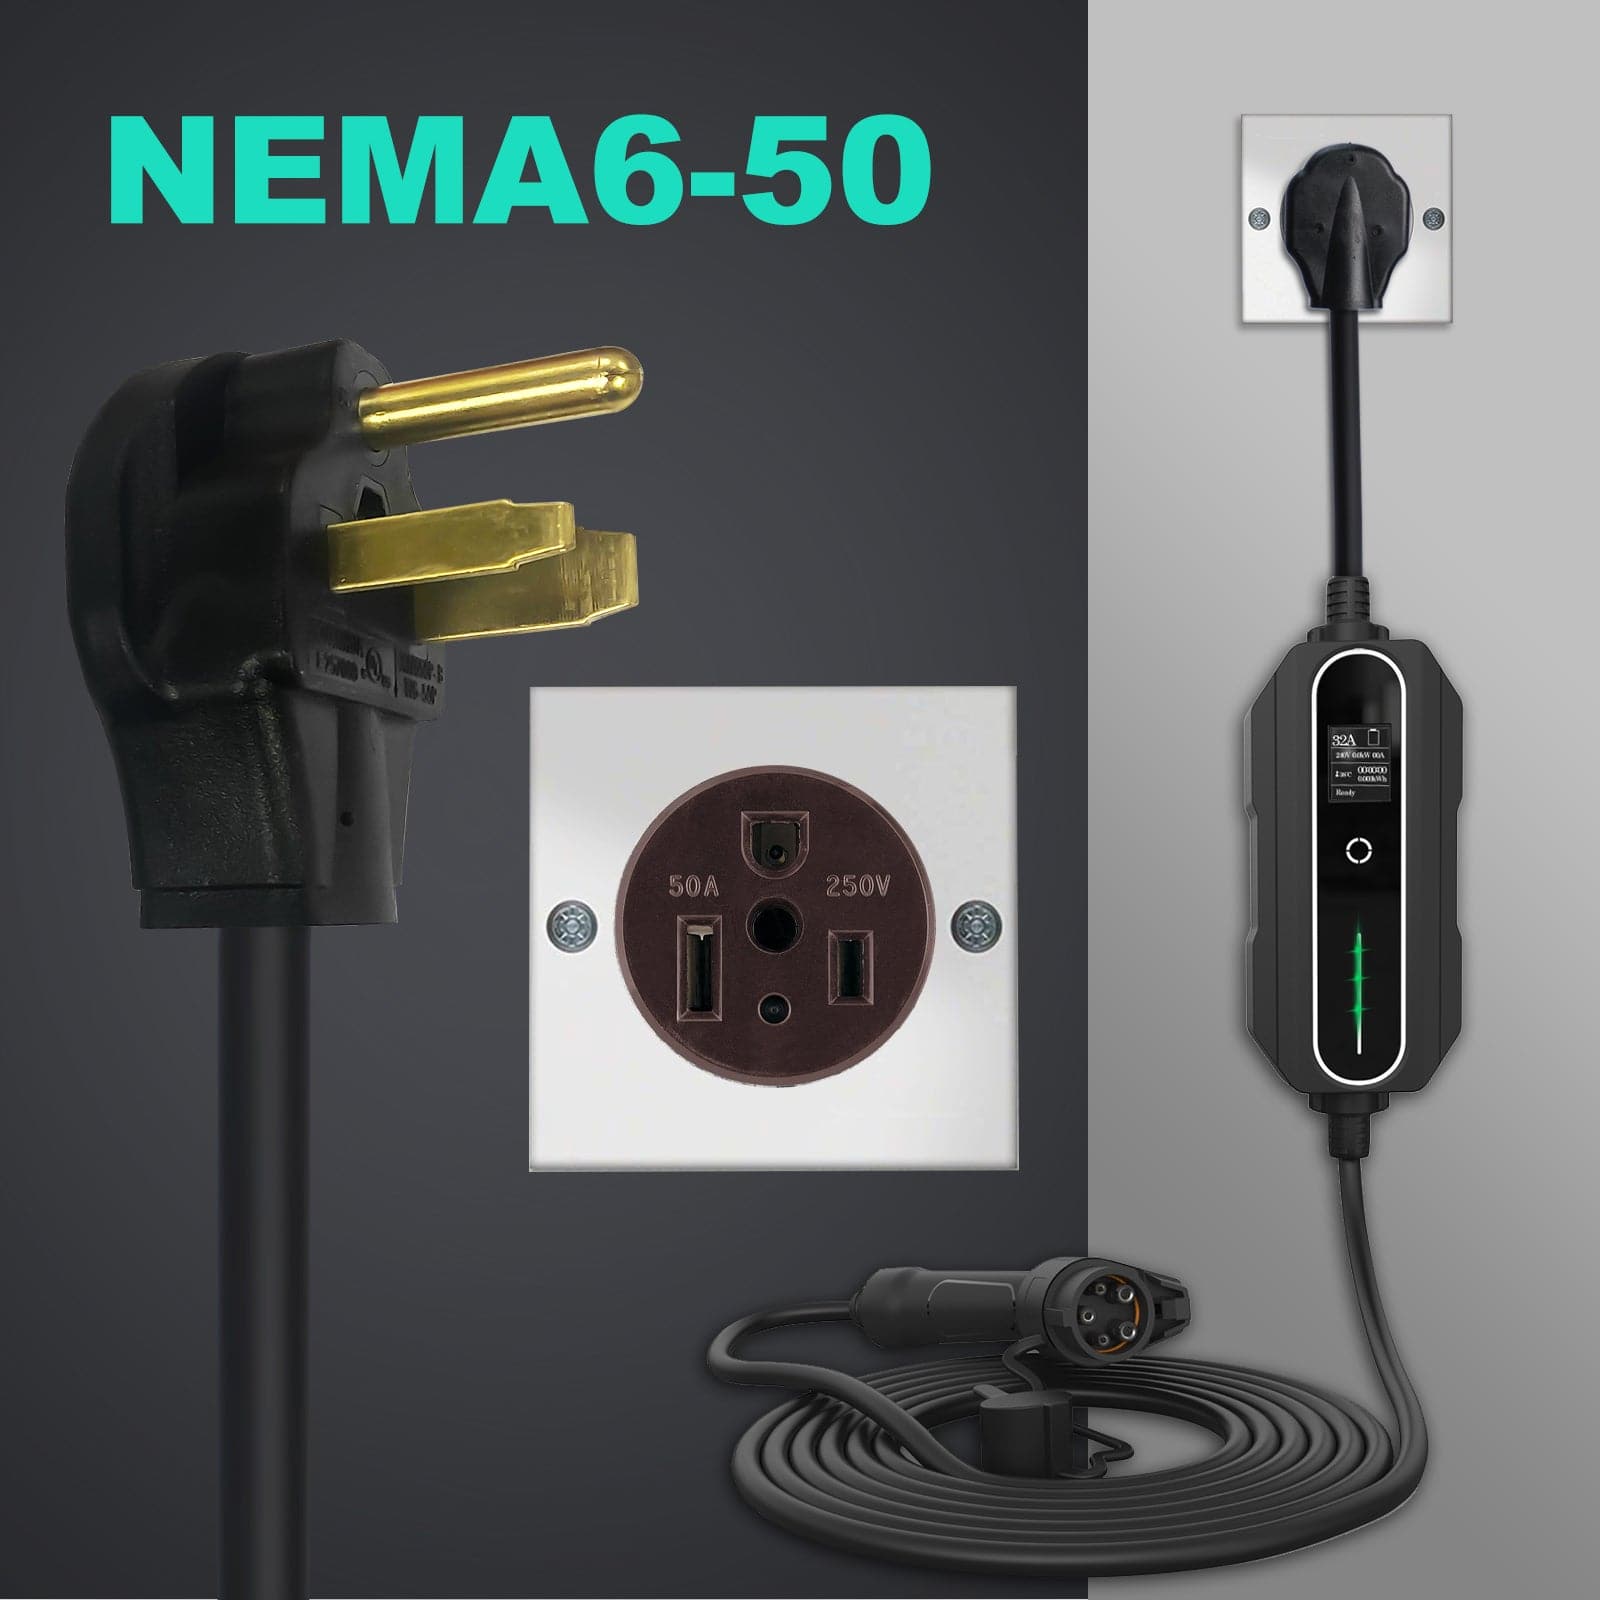 NEMA6-50 Electric Vehicle Charging Station